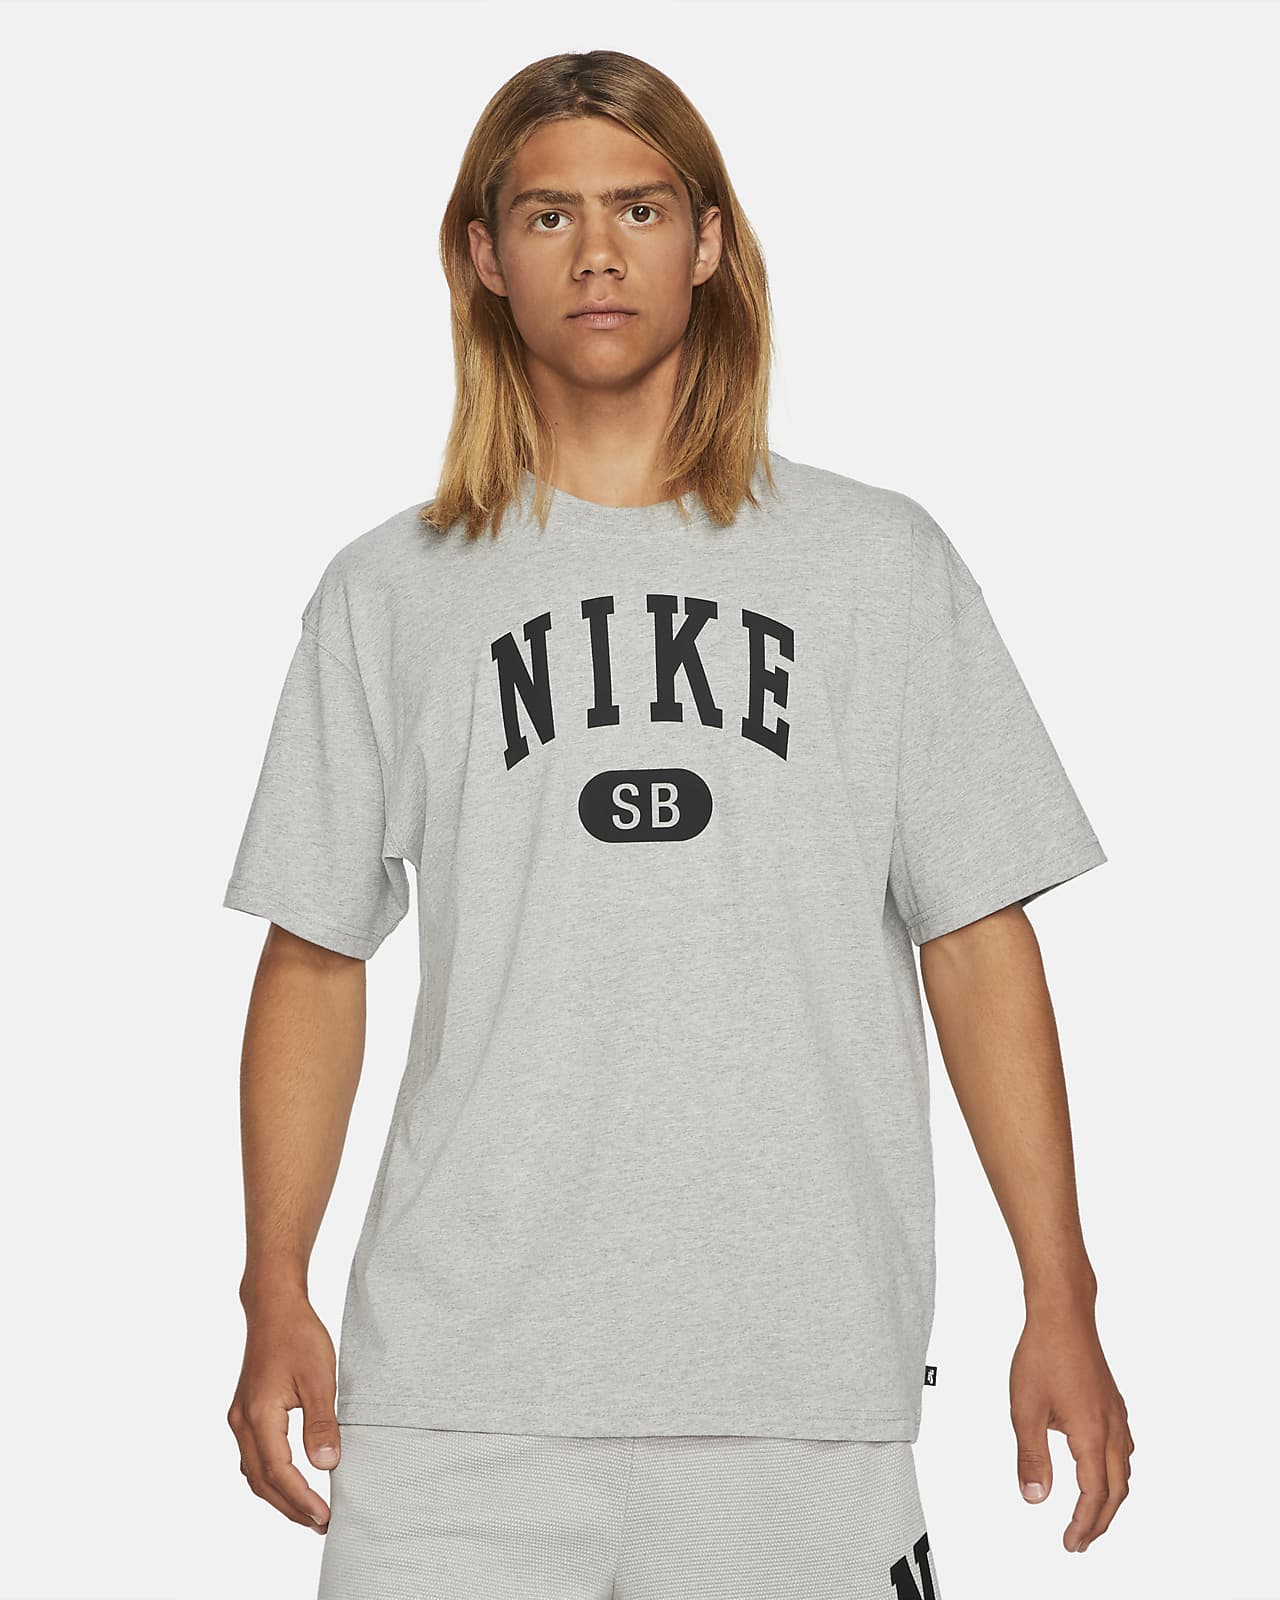 nike skateboarding t shirt